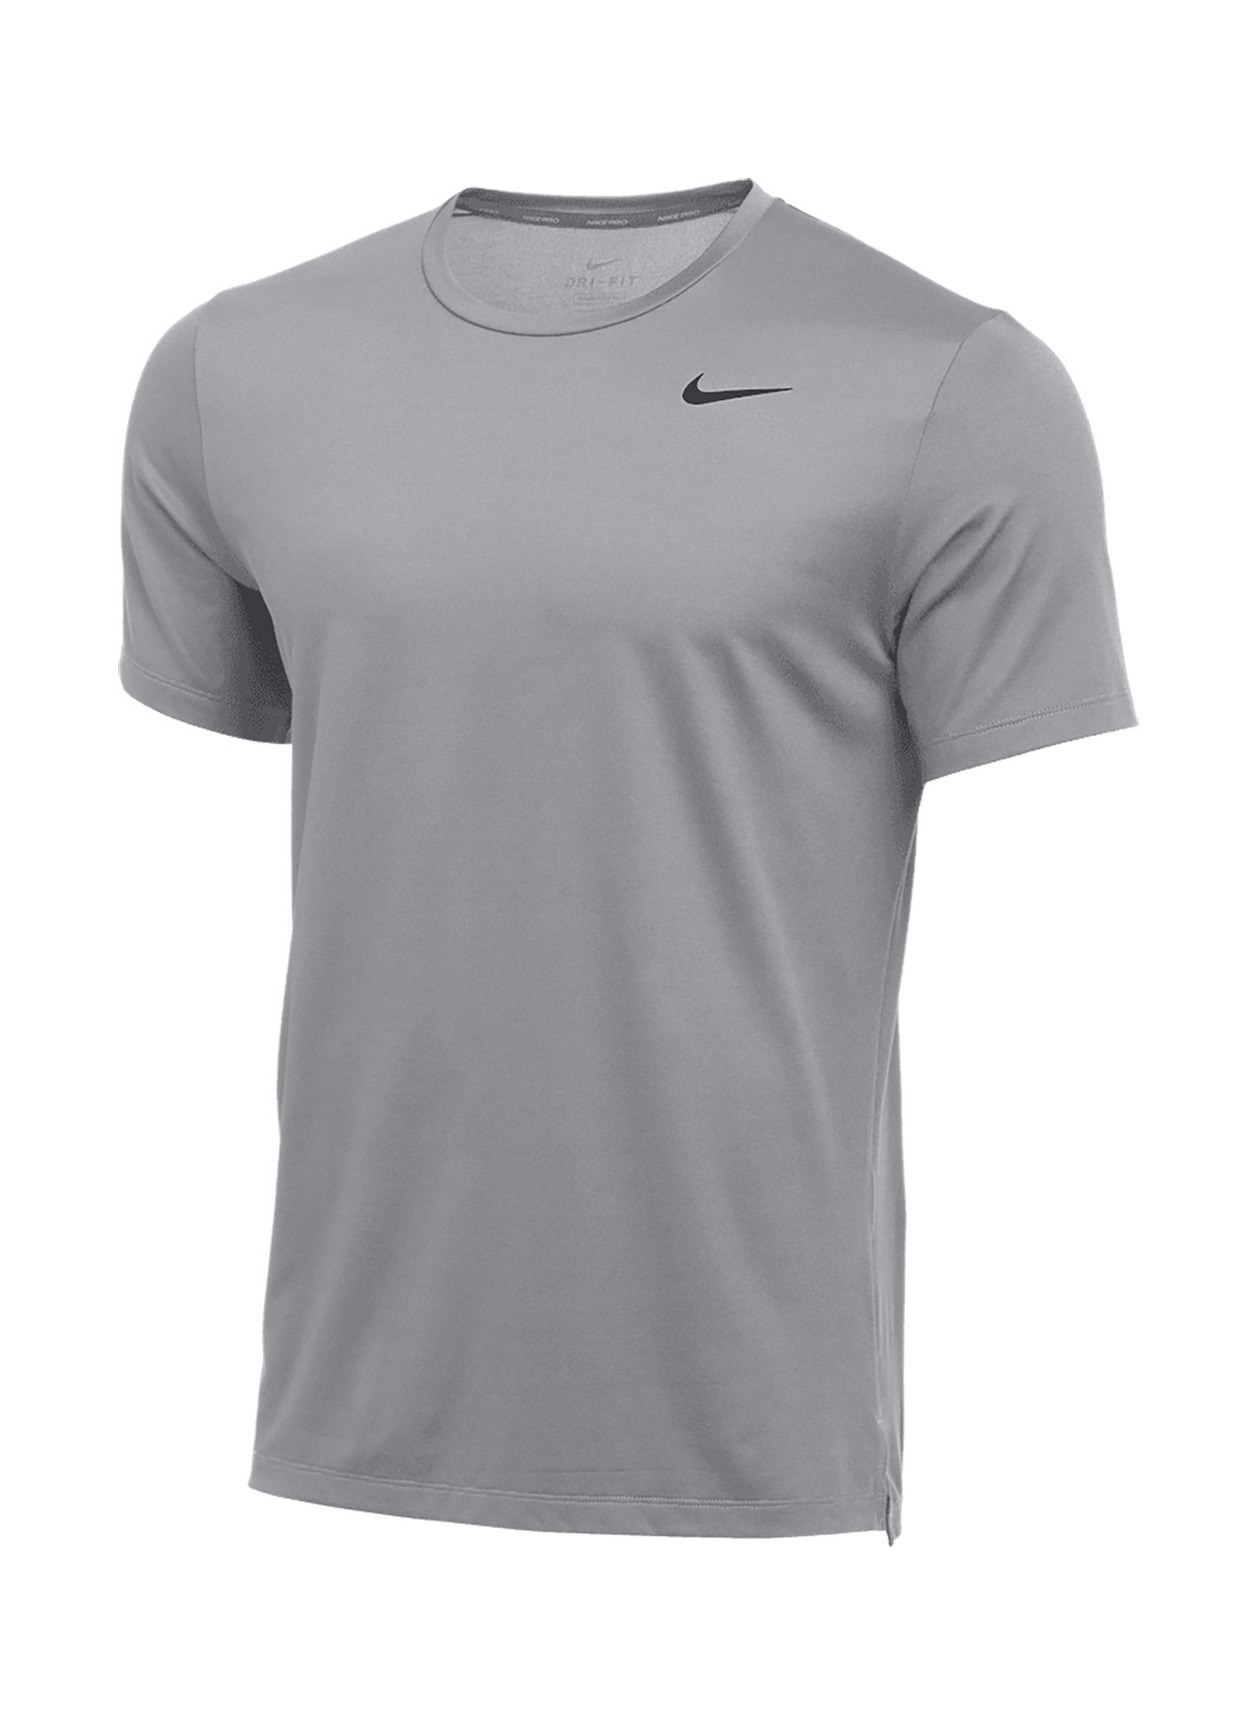 Nike Wolf Grey Heather Dri-FIT Training T-Shirt | Nike